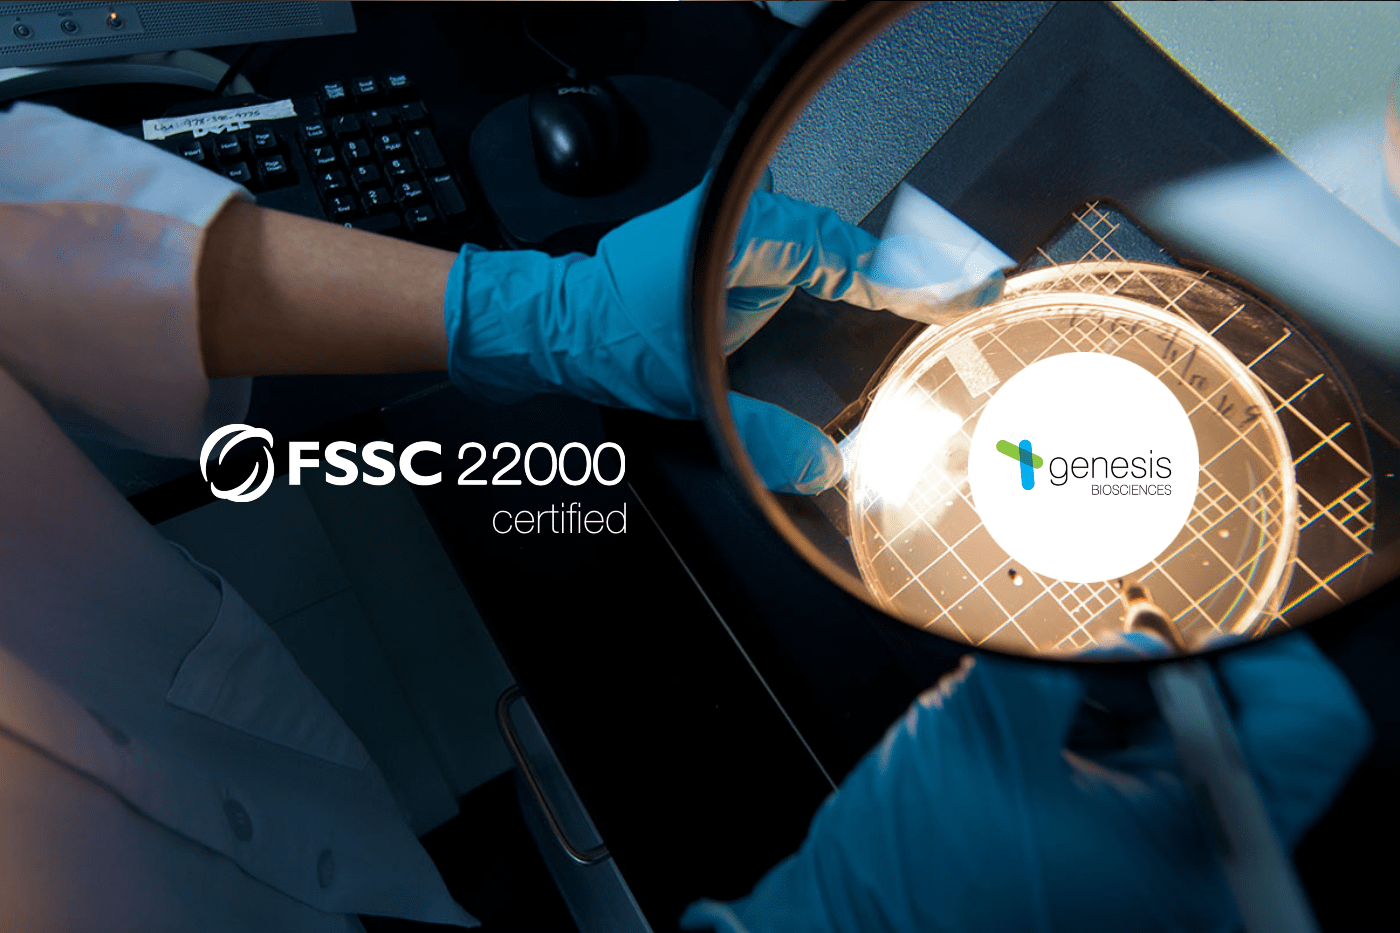 Genesis Biosciences is now officially an FSSC 22000 certified company